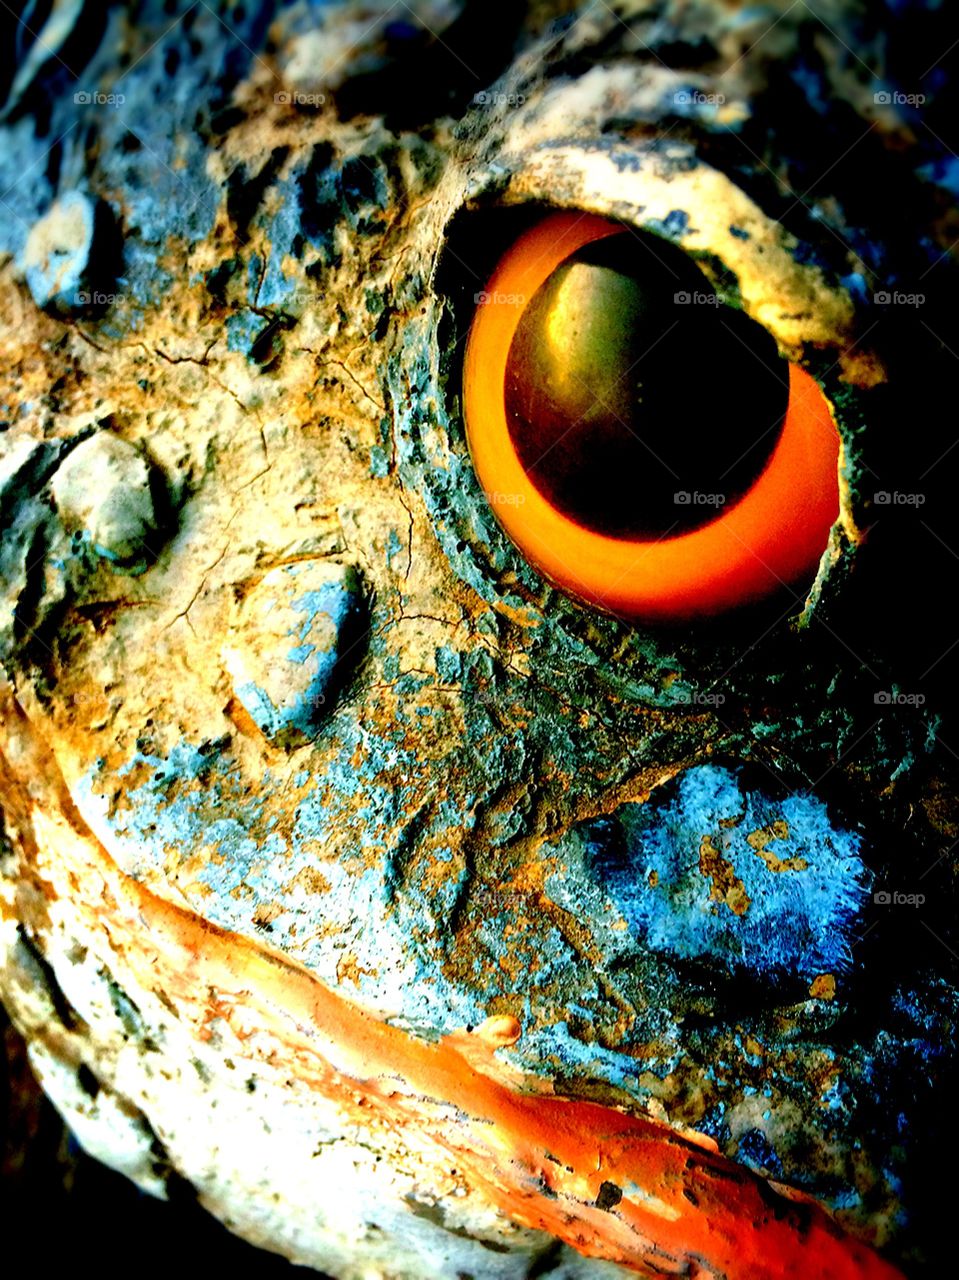 Frog eyes 